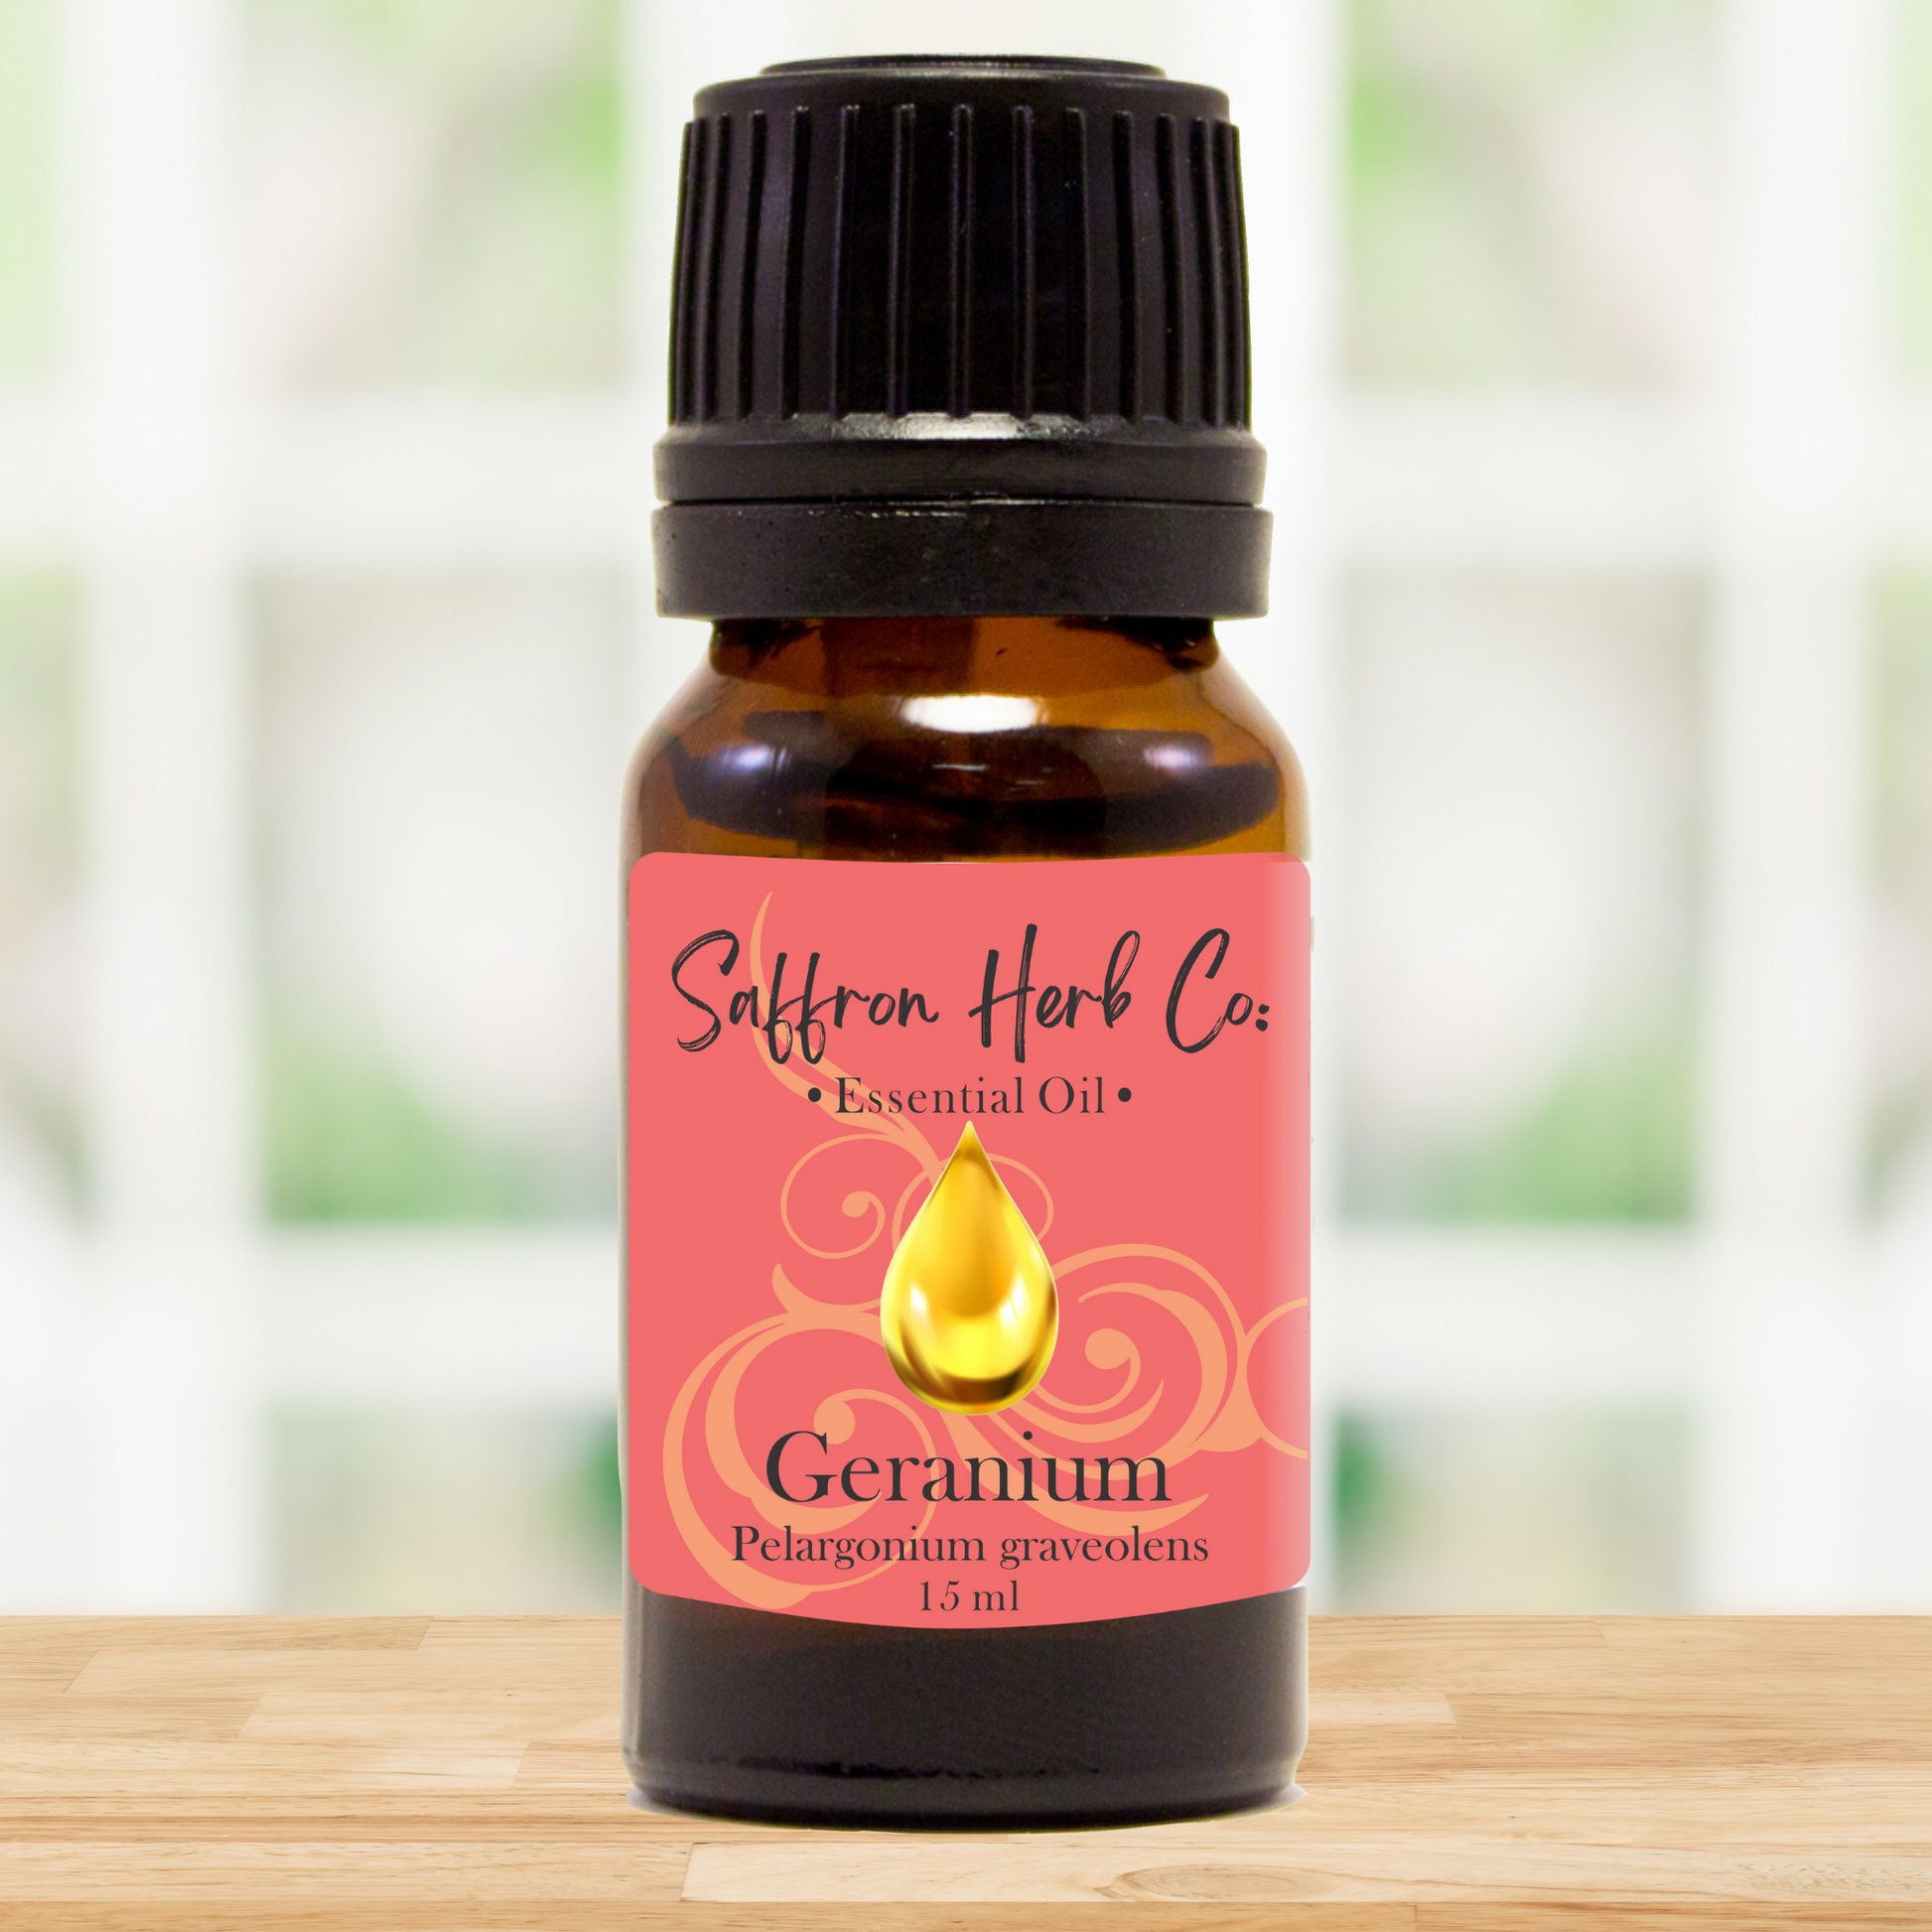 Ultimate Essential Oils Set – Saffron Herb Co.